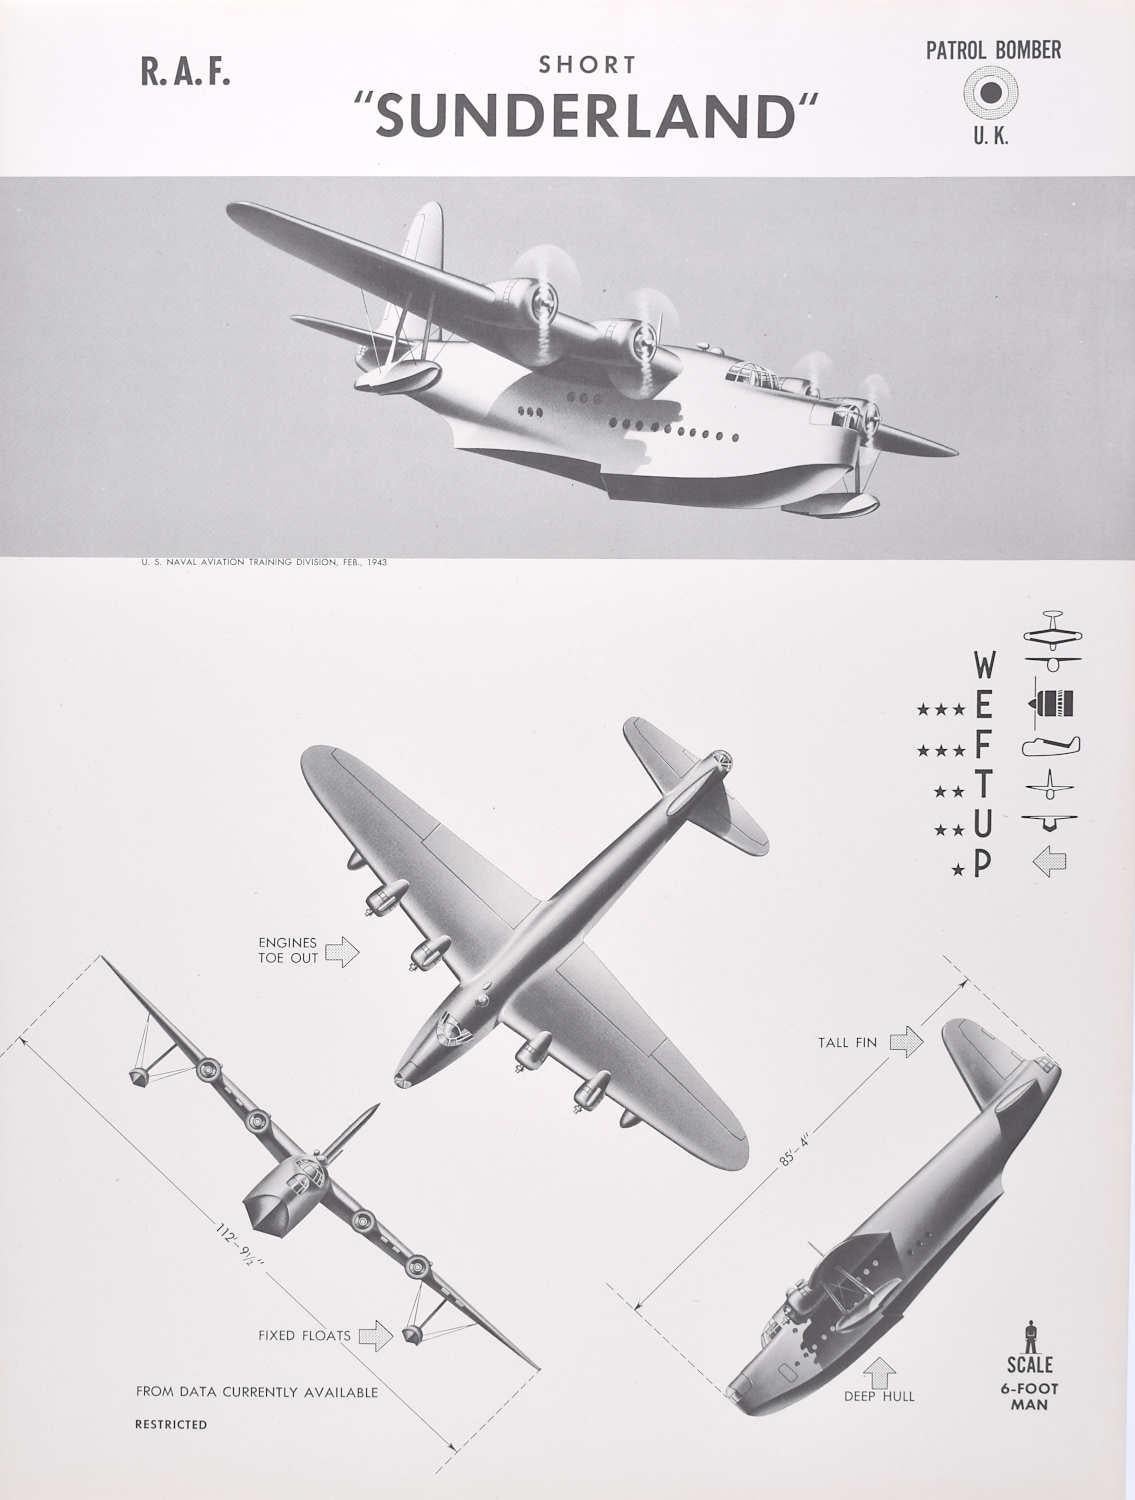 1943 Short "Sunderland" UK patrol bomber plane identification poster WW2 - Print by Unknown